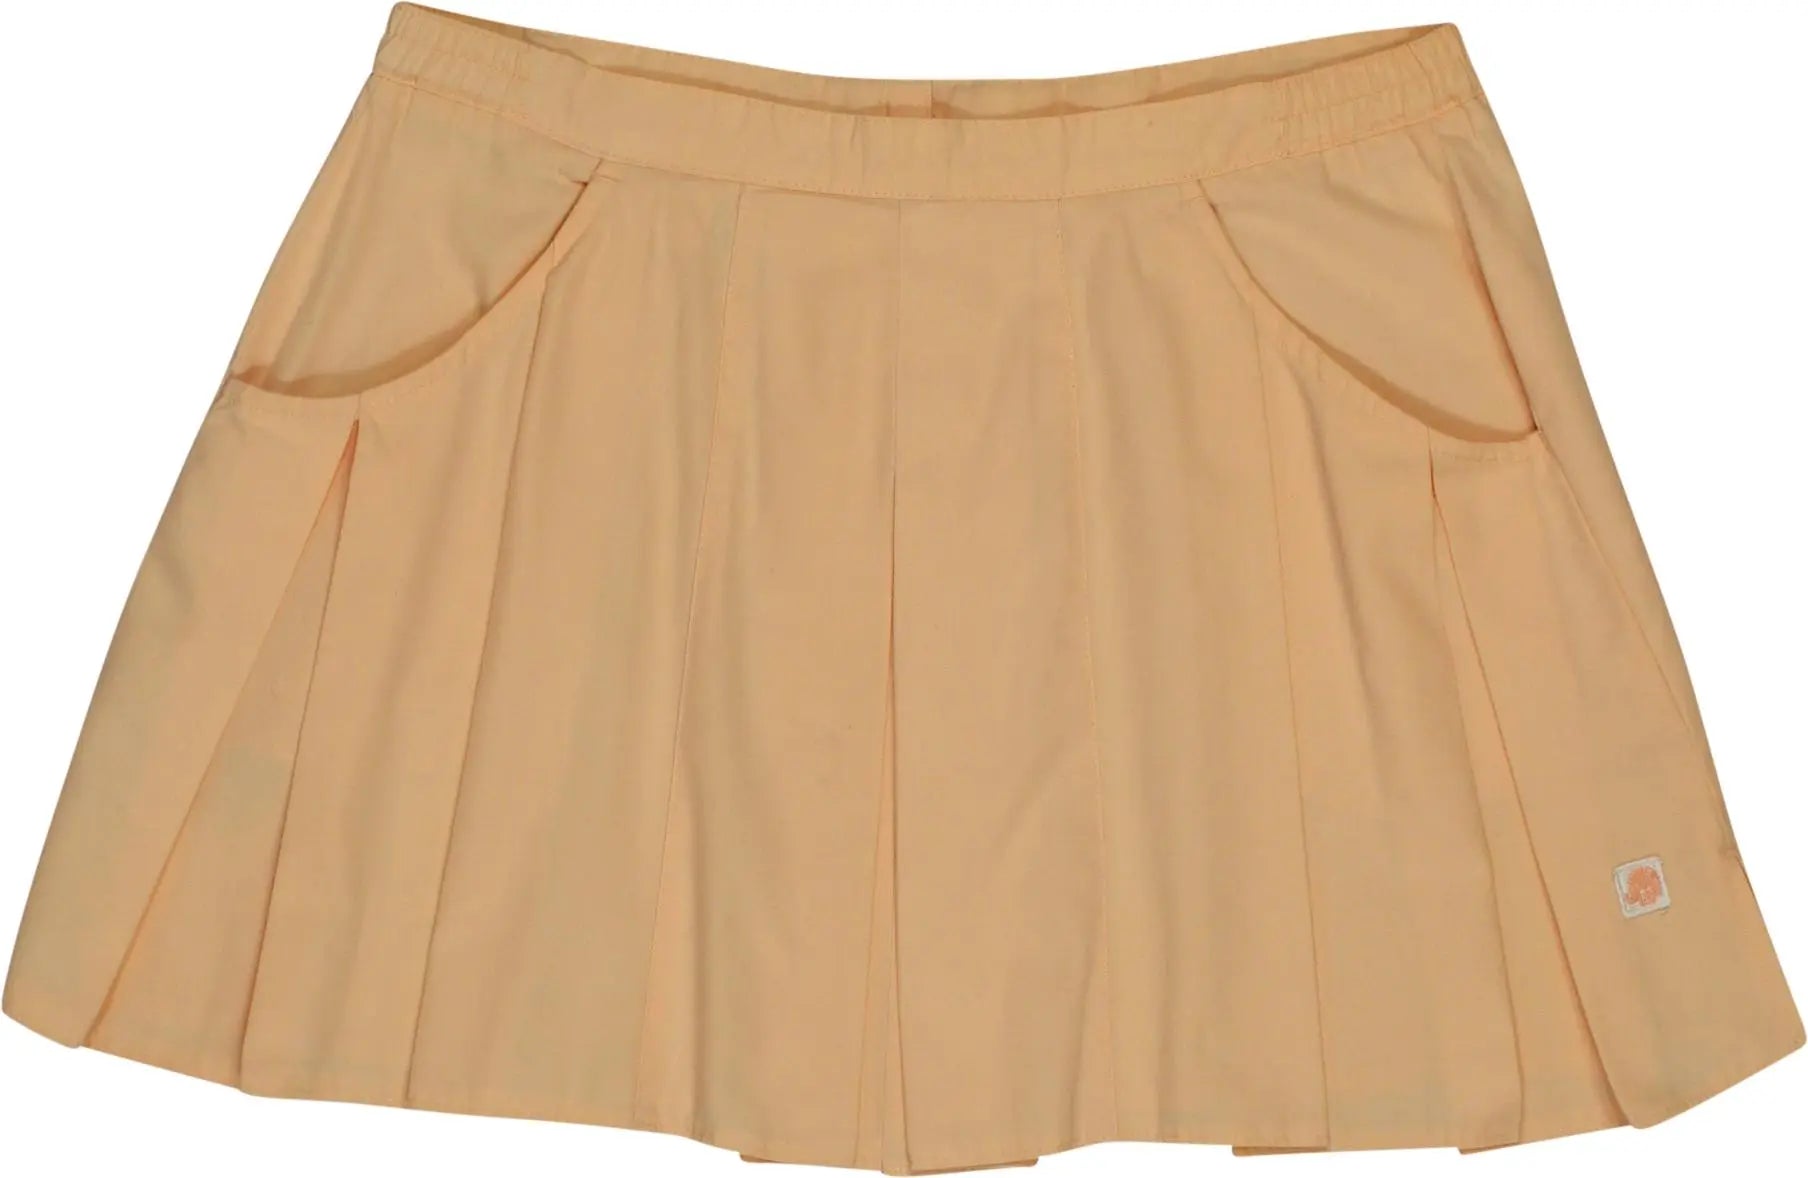 Elefanti - Vintage Pleated Skirt- ThriftTale.com - Vintage and second handclothing